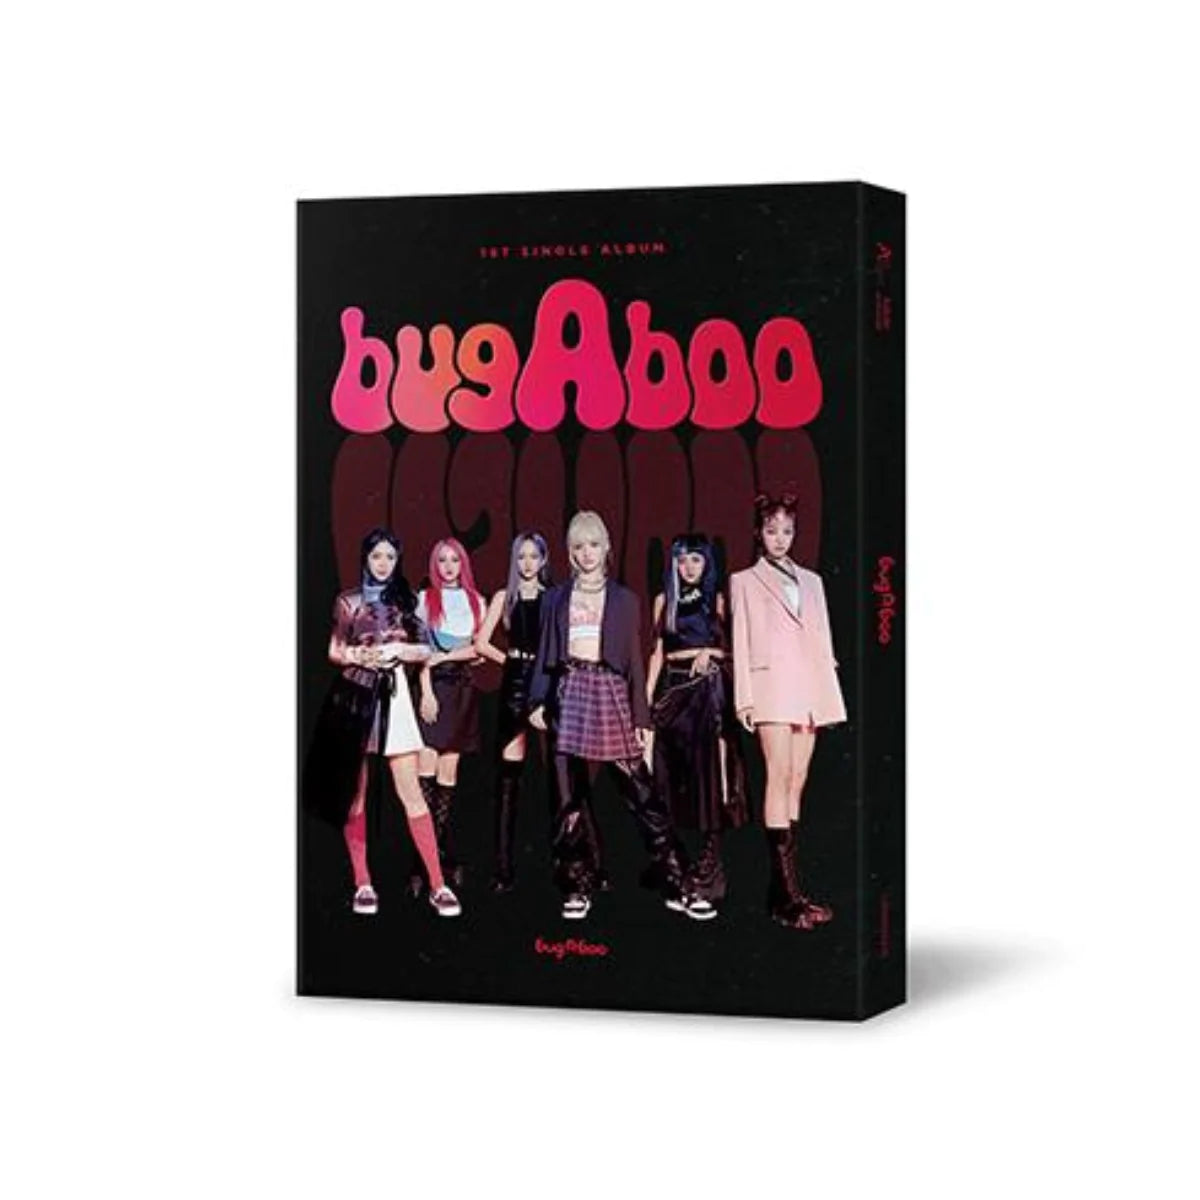 bugAboo - Single Album Vol. 1